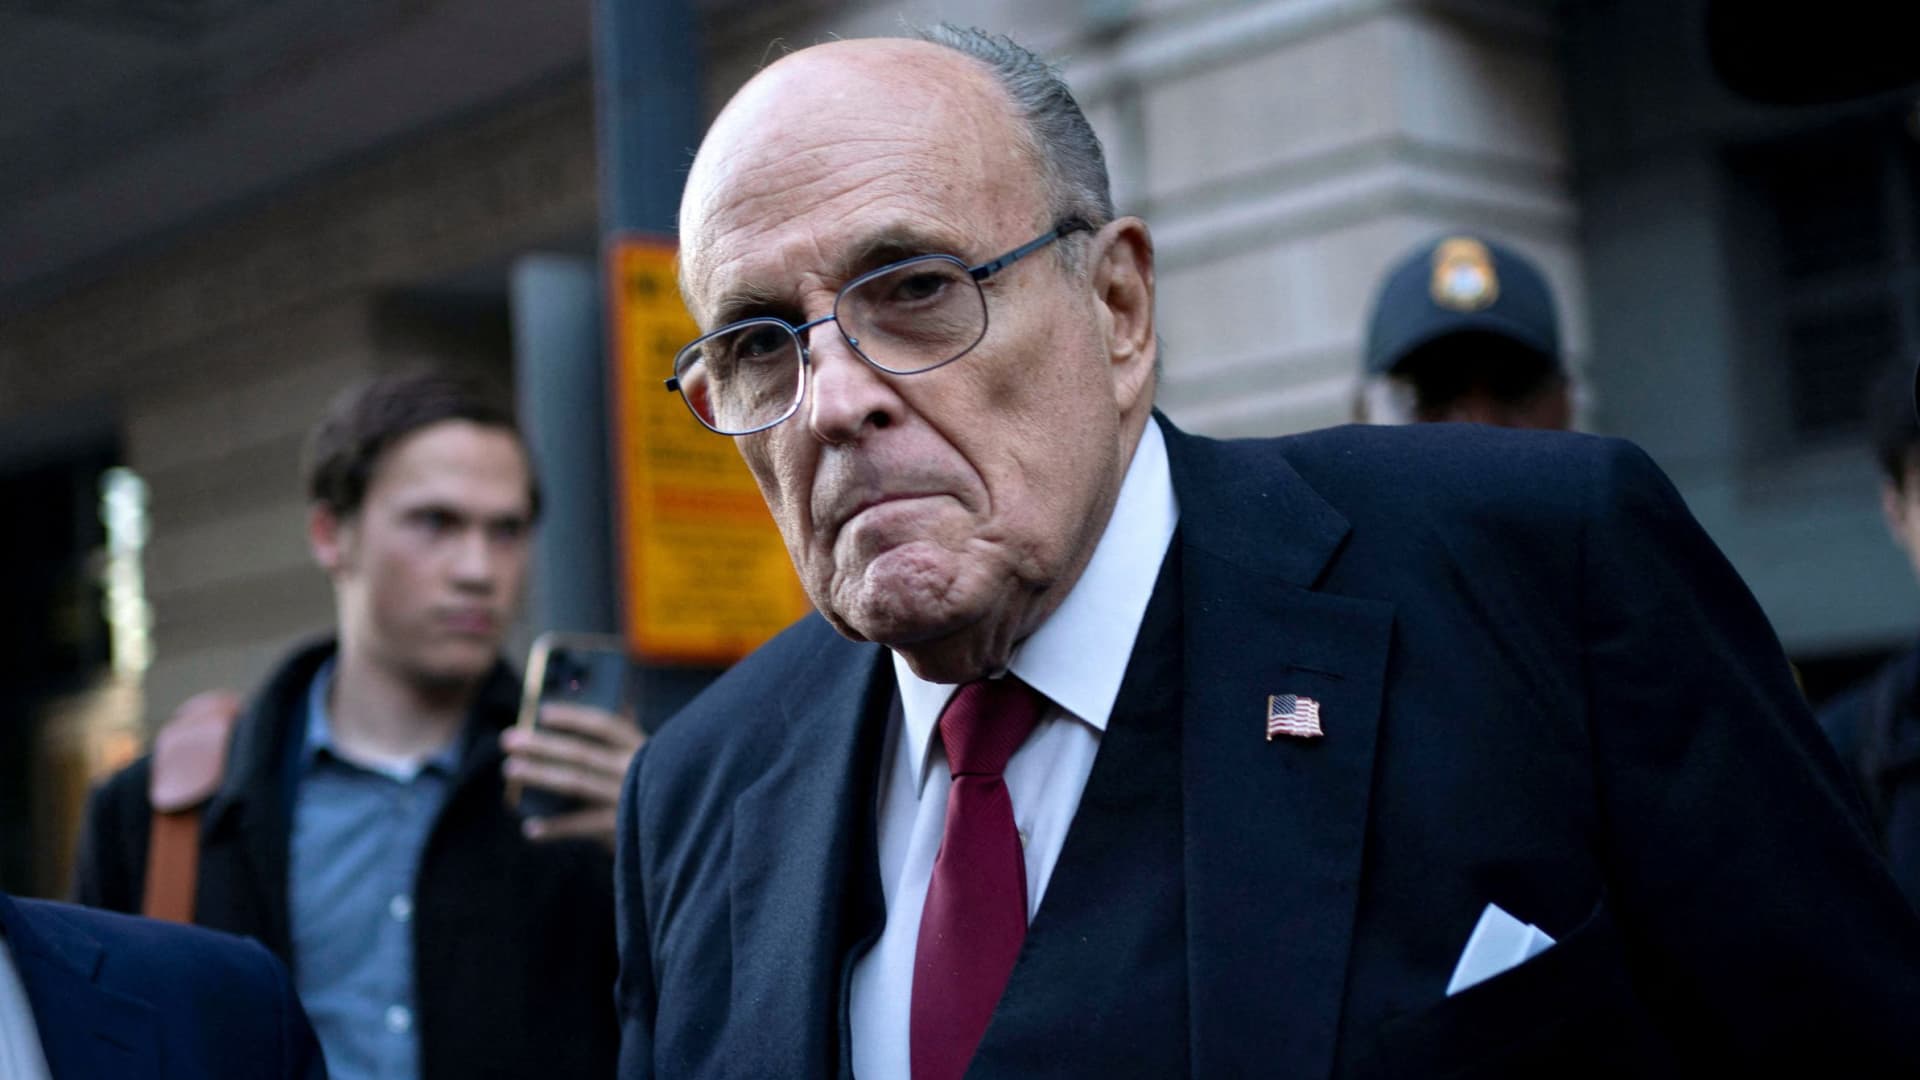 Trump lawyer Rudy Giuliani raises less than $1 million in legal defense fund